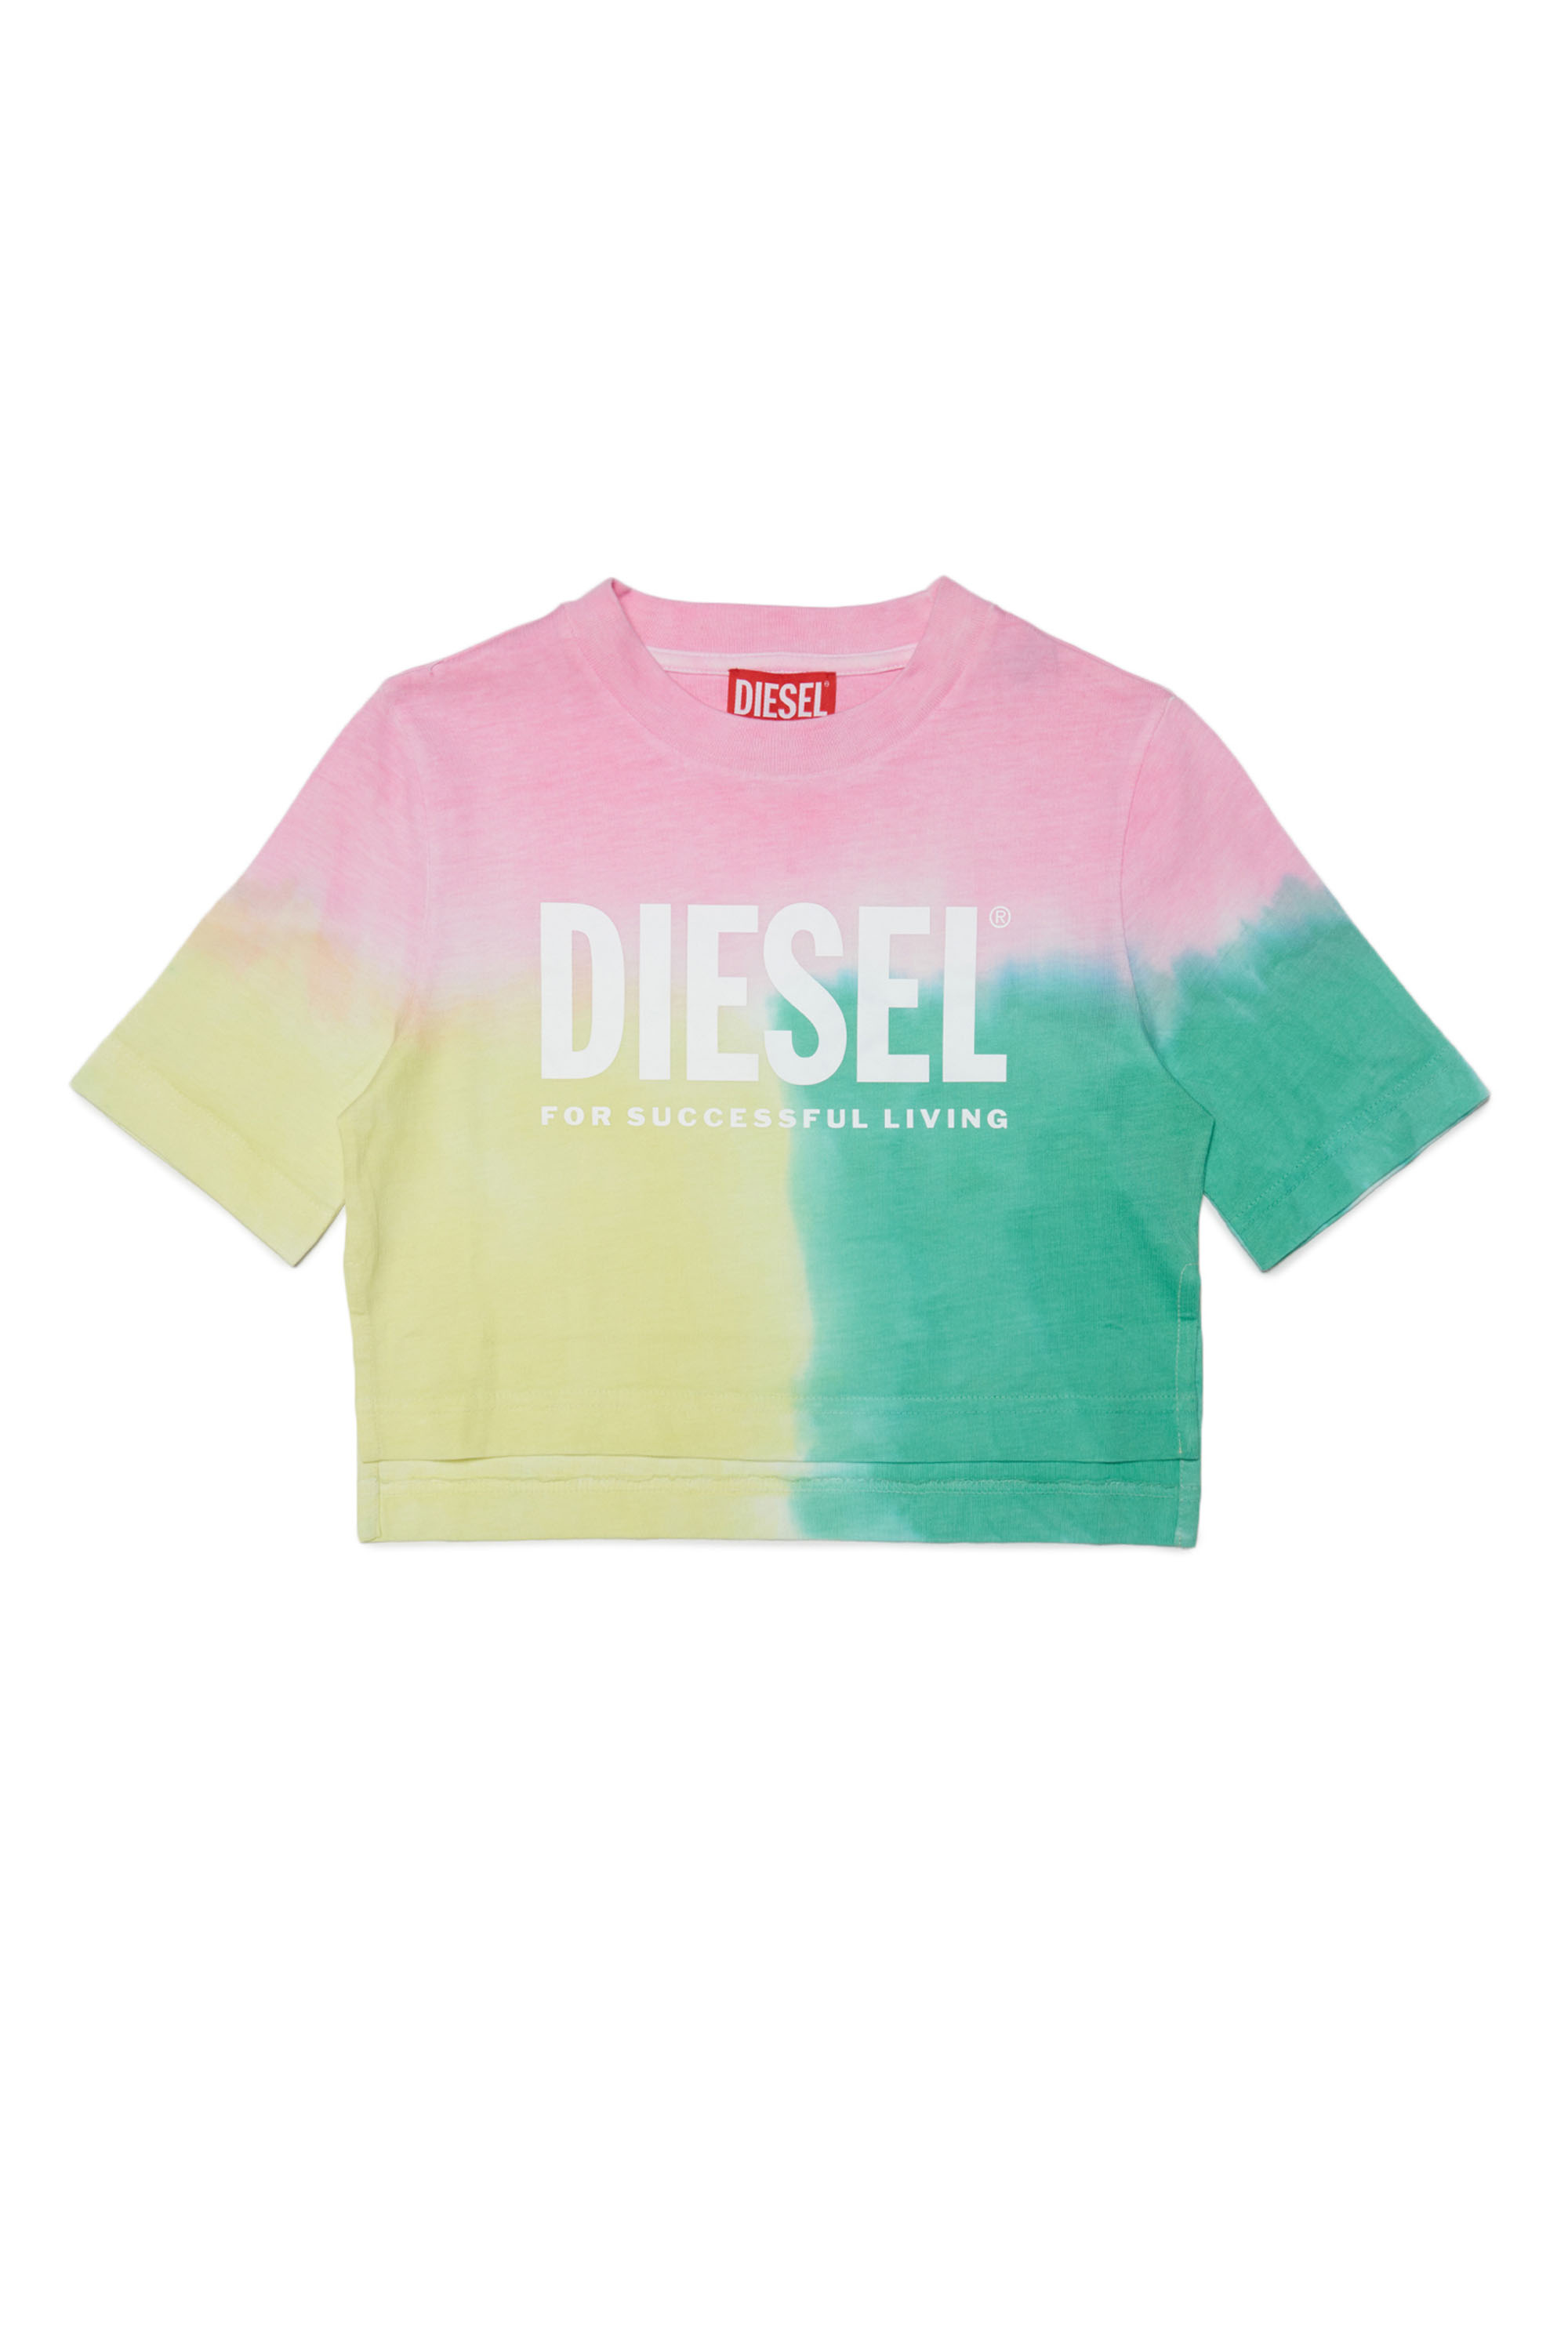 Diesel - TELLYLORI, Pink/Green - Image 1